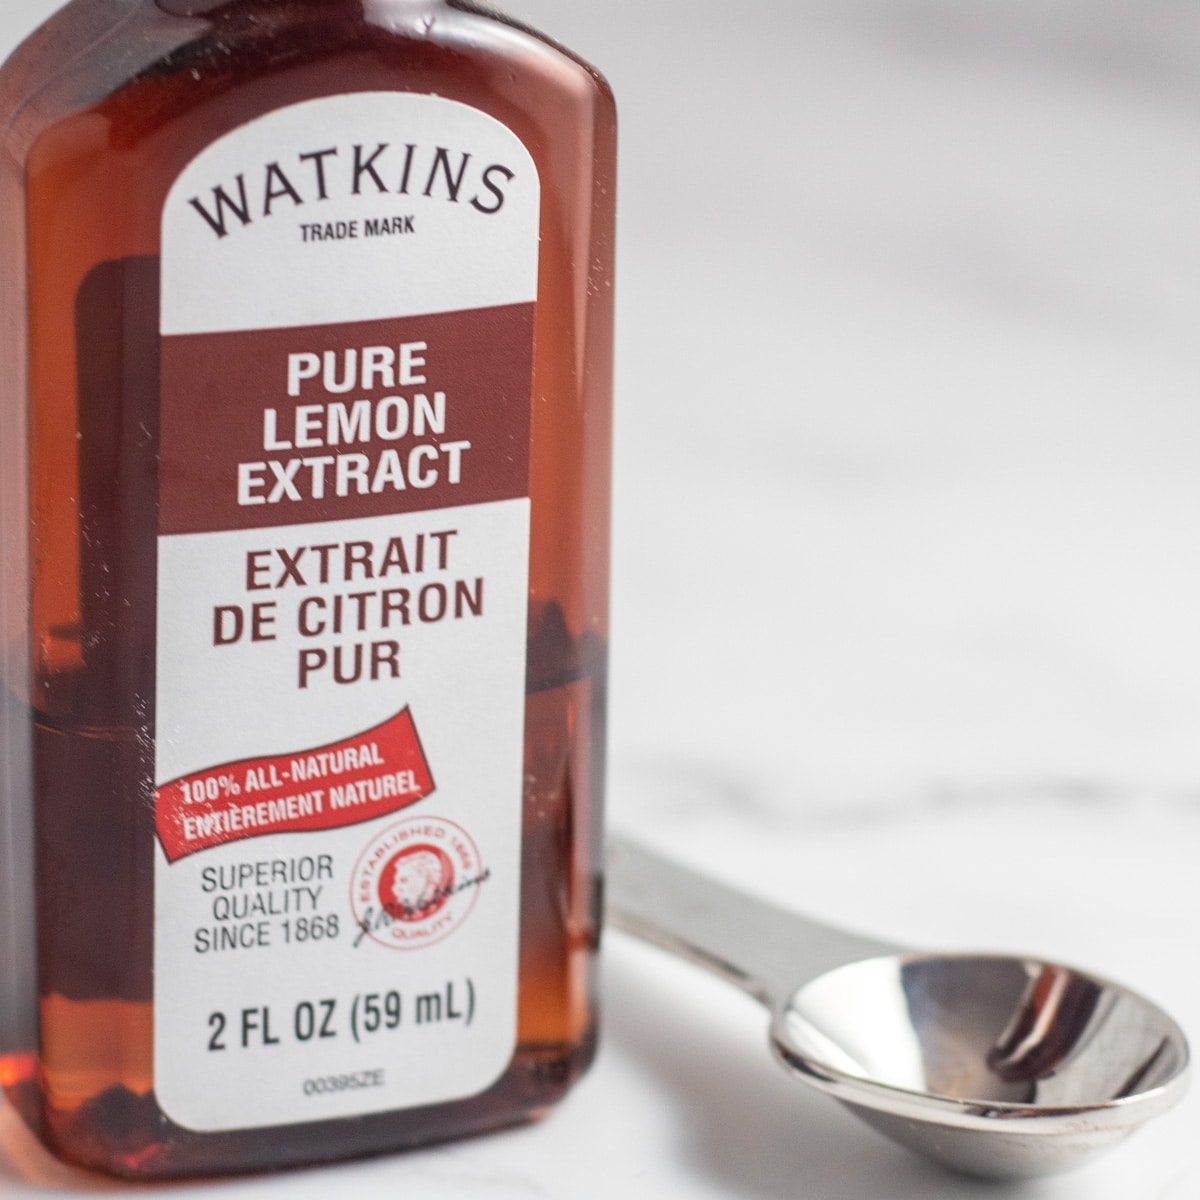 Lemon extract substitute image with bottled lemon extract.